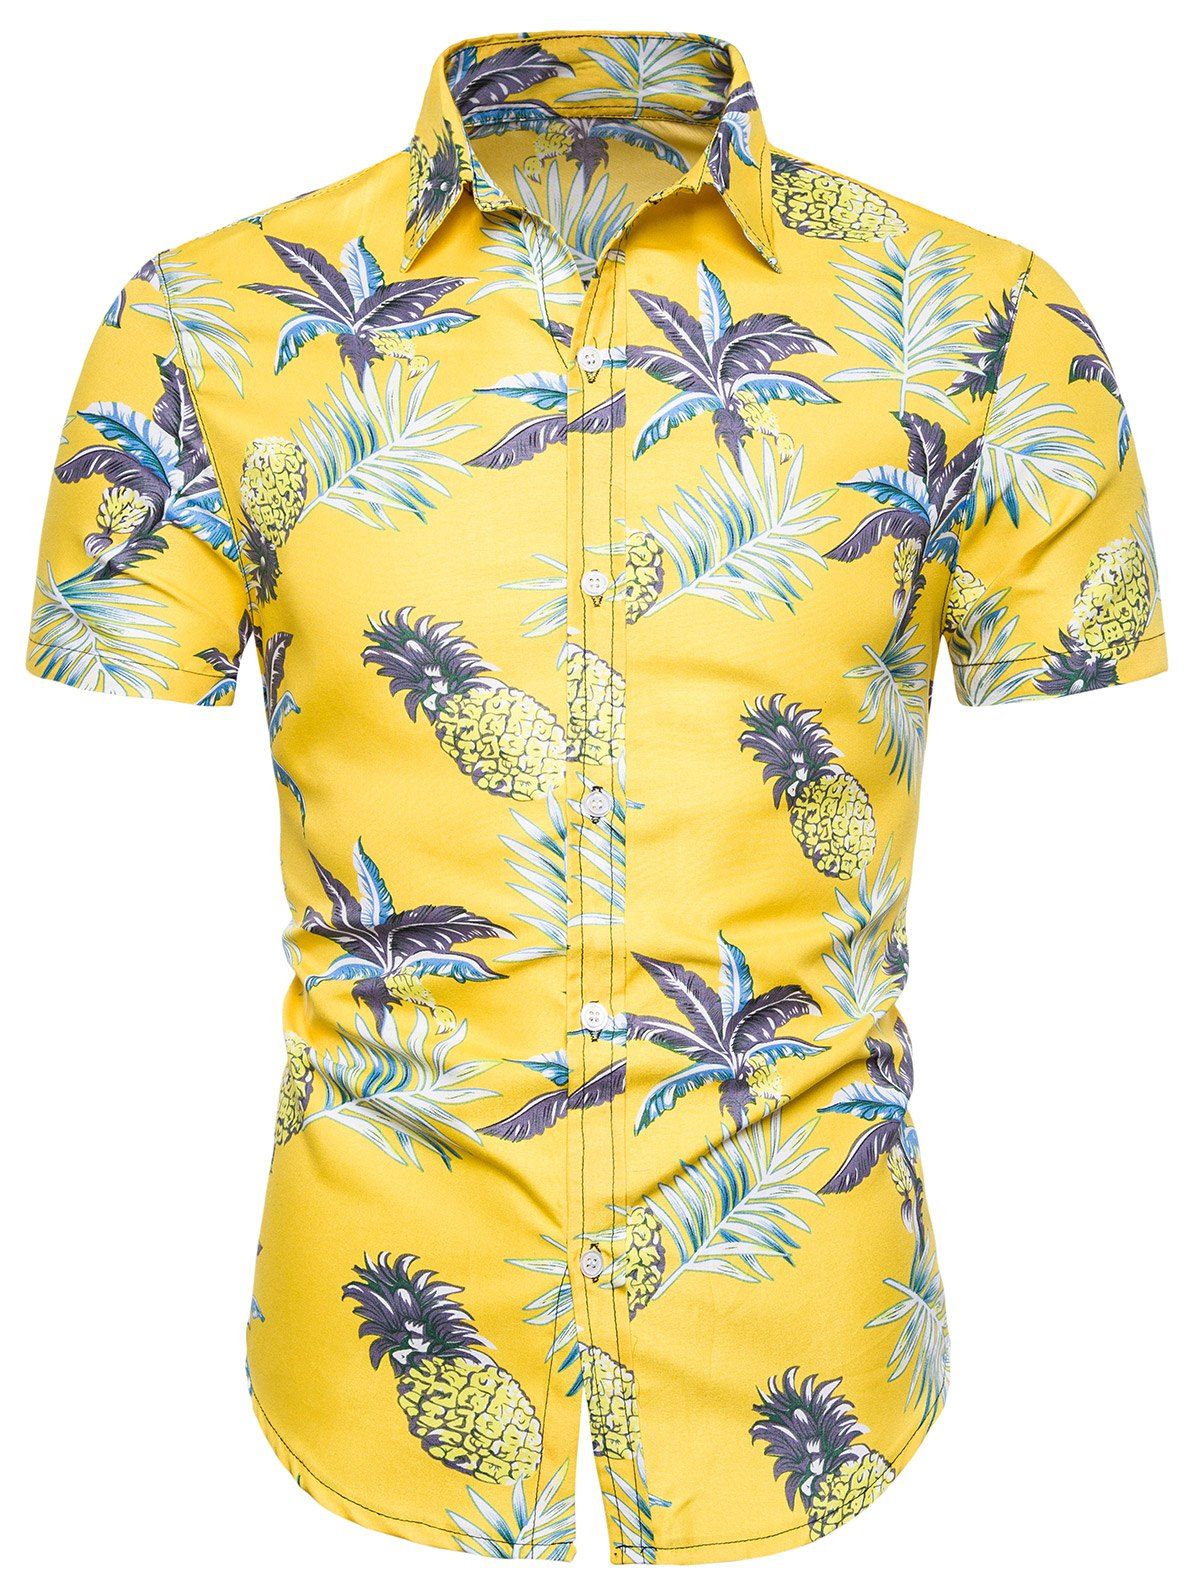 Pineapple Pattern Leisure Short Sleeves Shirt - CORN YELLOW XL